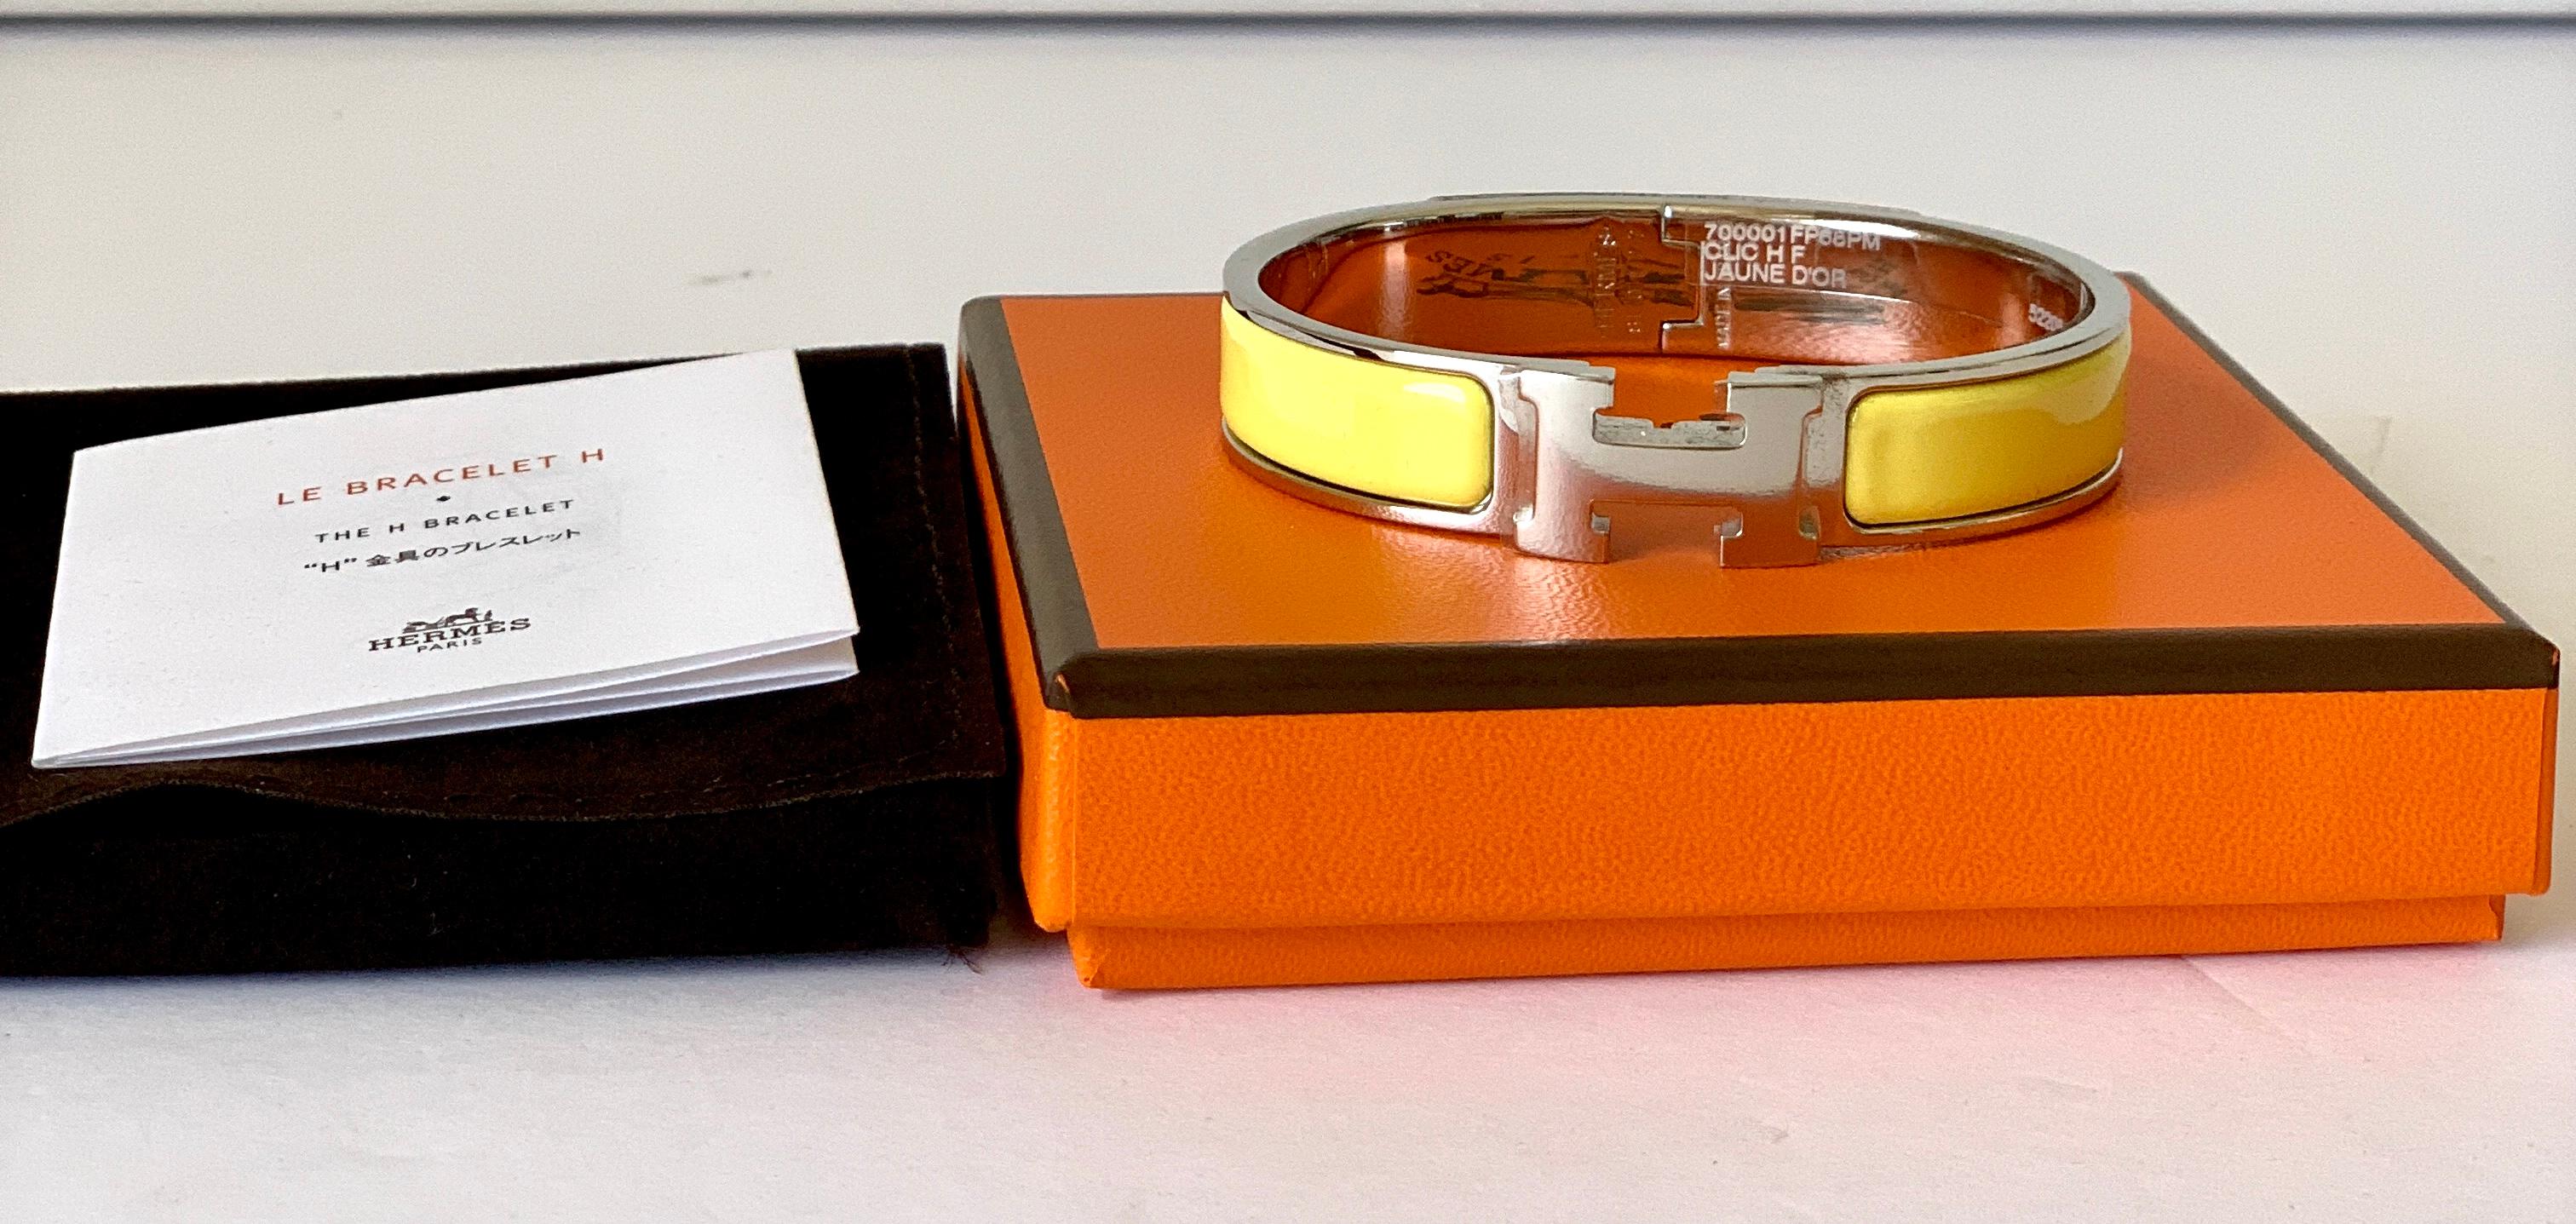 Hermes Clic  H bracelet in Palladium Plated 
Enamel Bracelet
H opening
Color: Jaune Yellow
Size PM

Circumference: 7